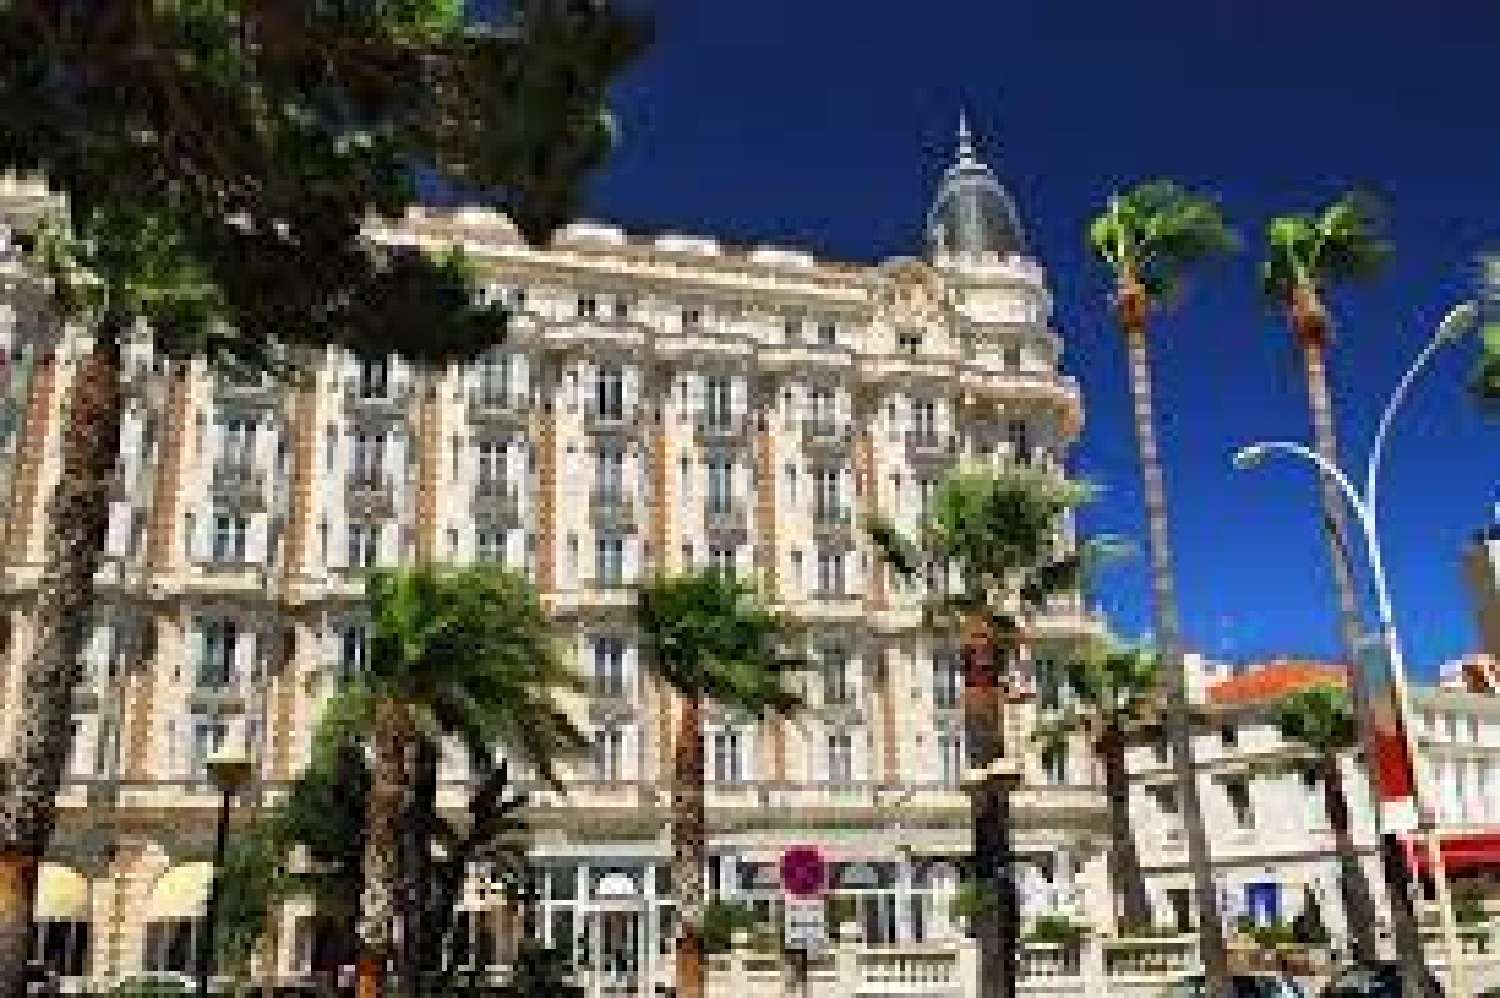 Cannes Alpes-Maritimes commerce foto 6830978